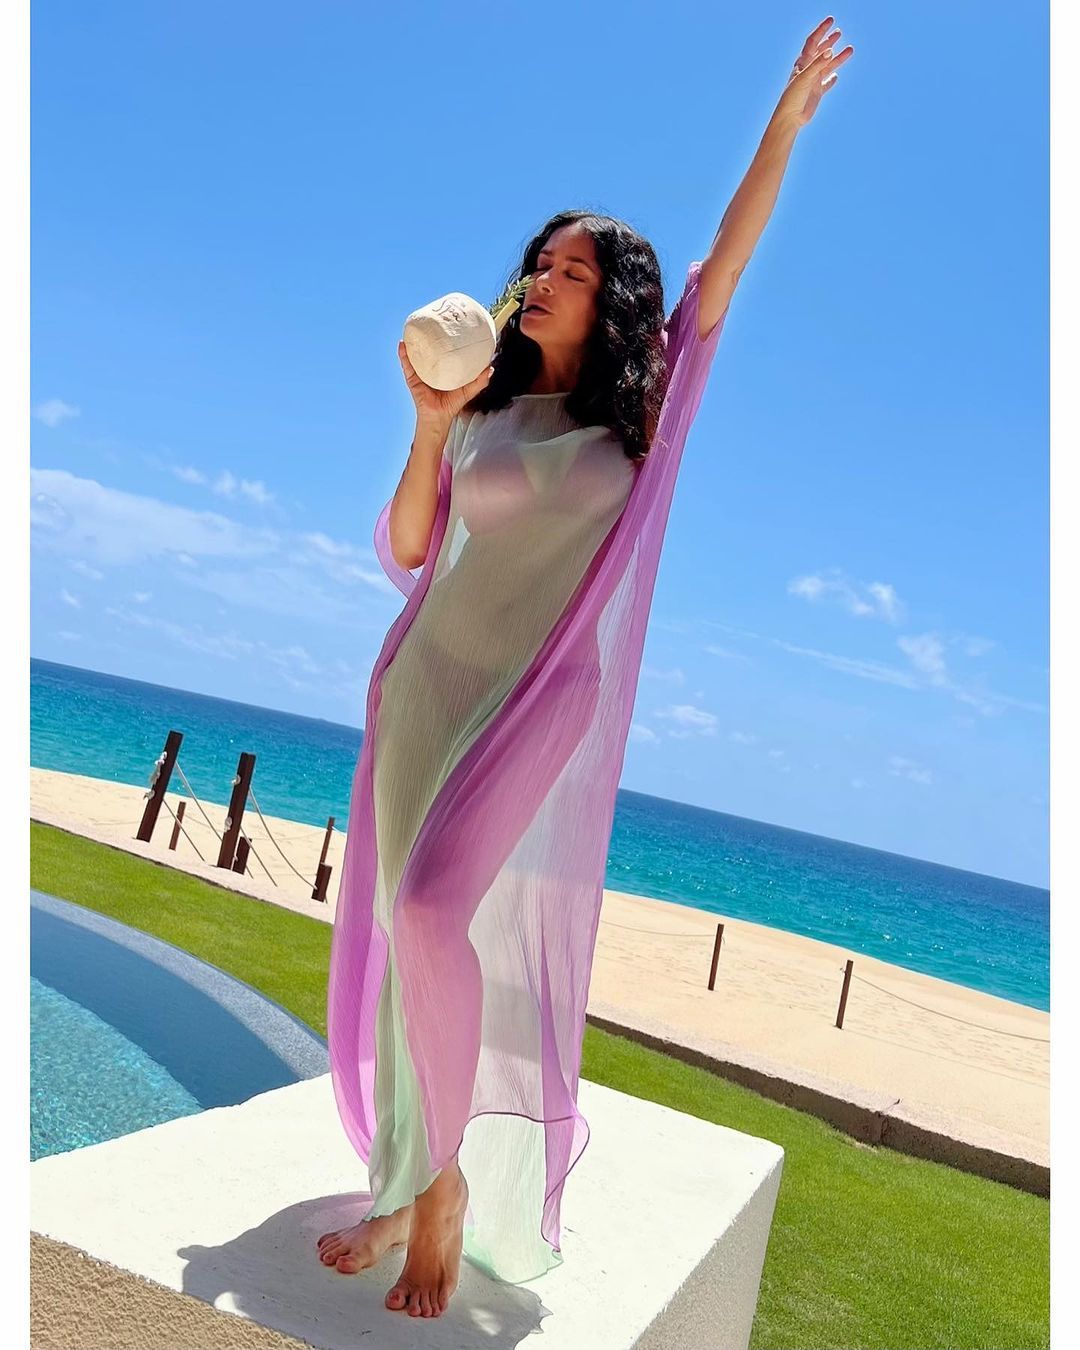 Too Hot & Sexy: Celebrity Model Gets Soaking Wet in Revealing Swimwear  (Photos)